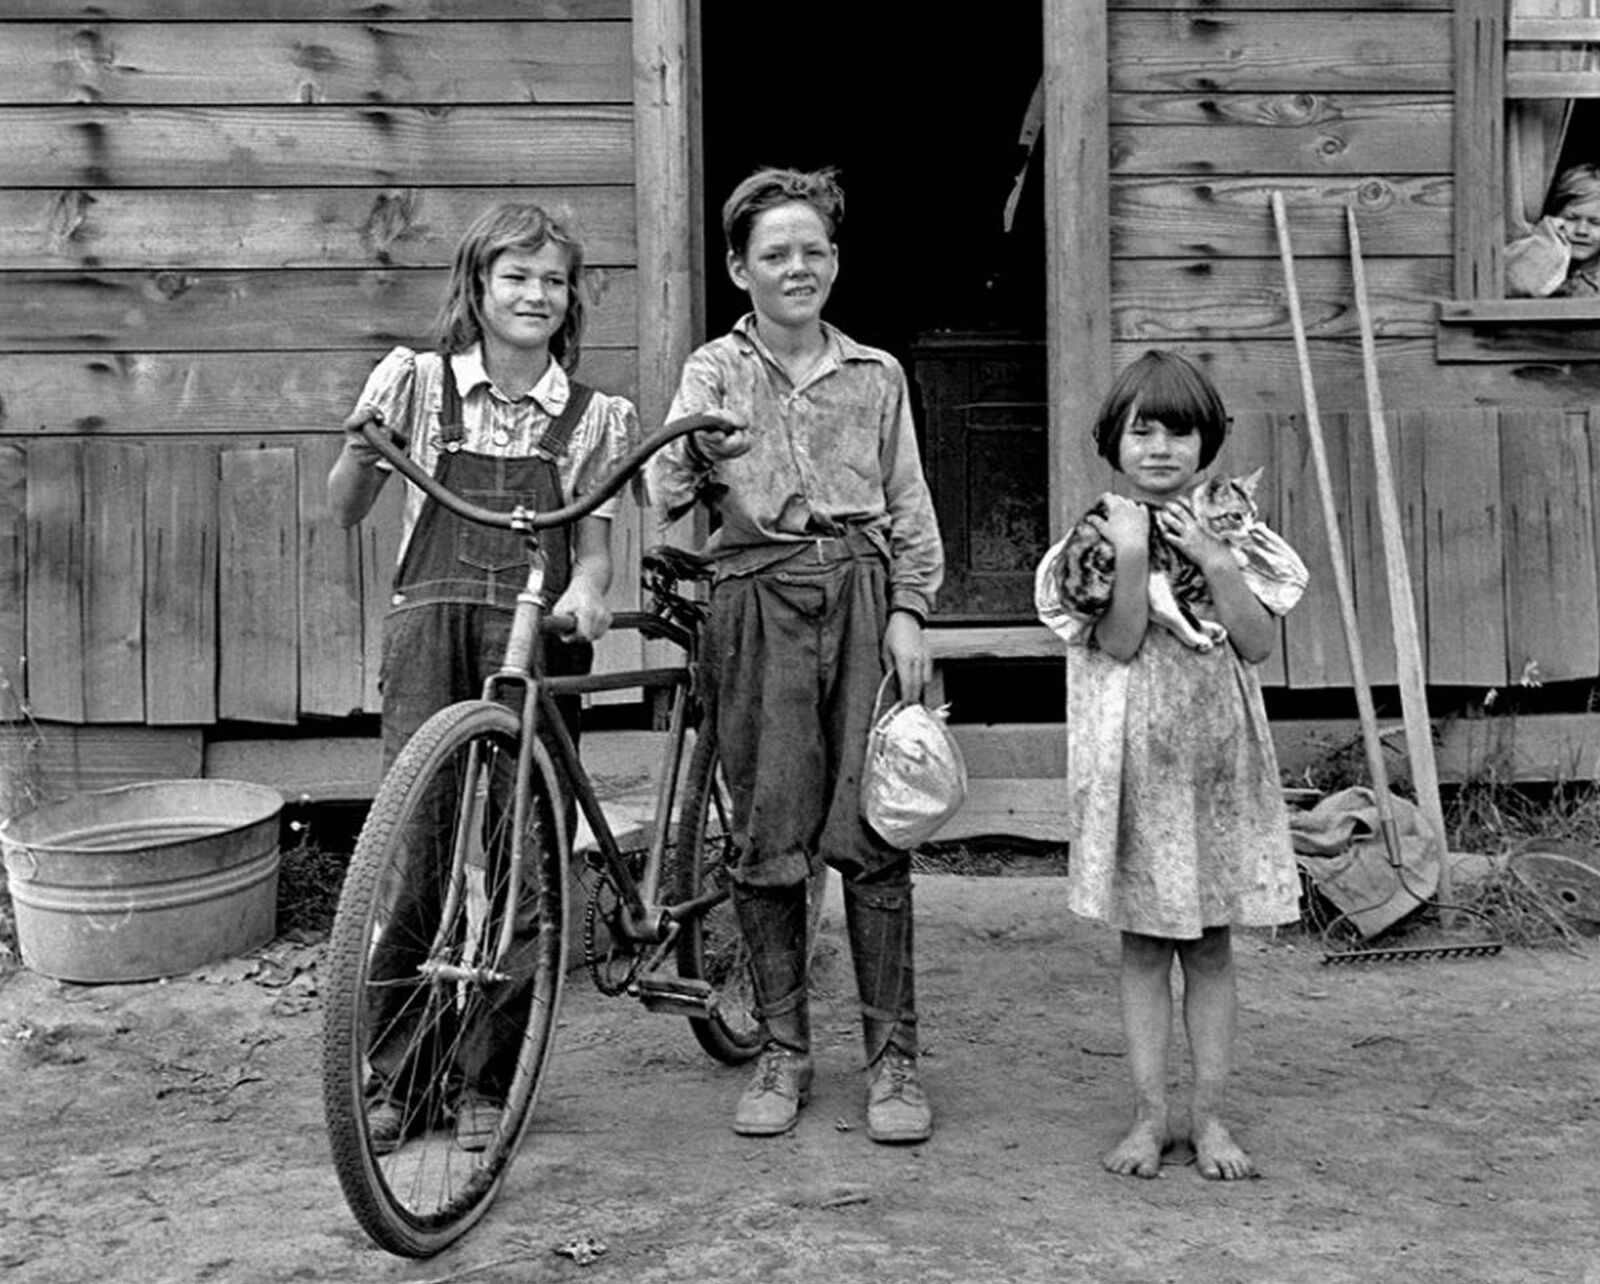 1939 DEPRESSION ERA KIDS in MICHIGAN 8x10 Borderless Photo